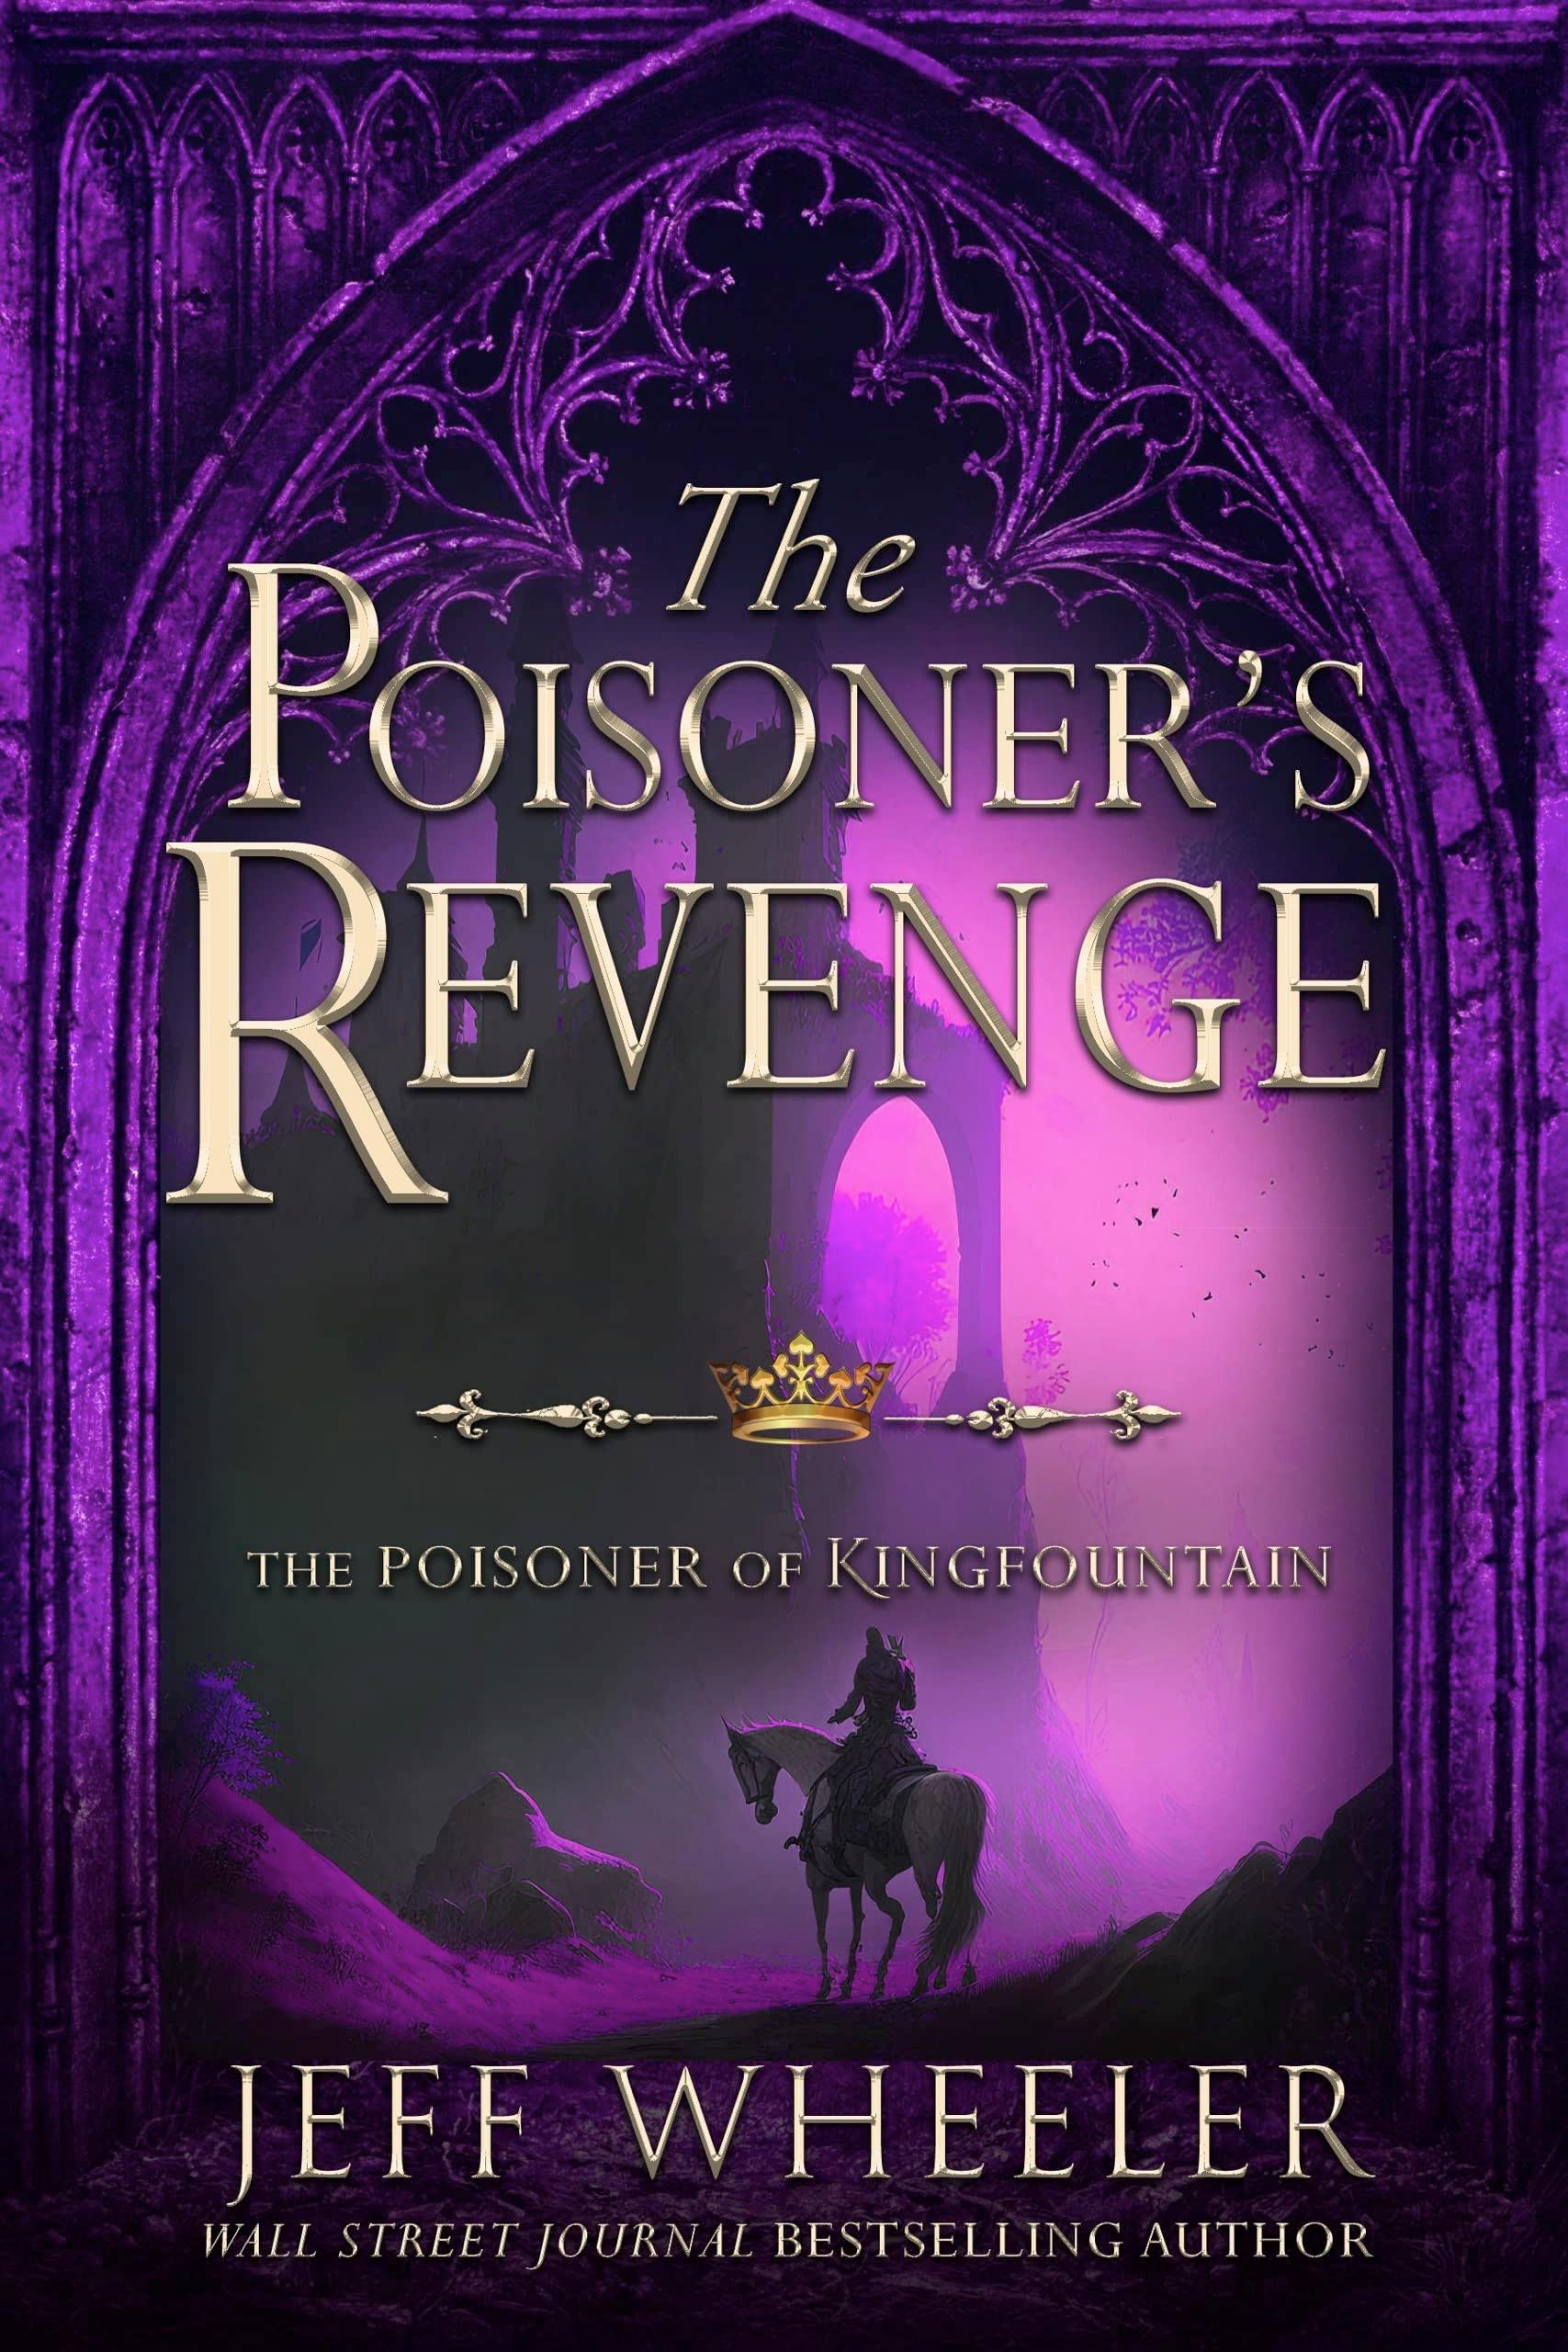 The Poisoner’s Revenge: A Kingfountain Prequel